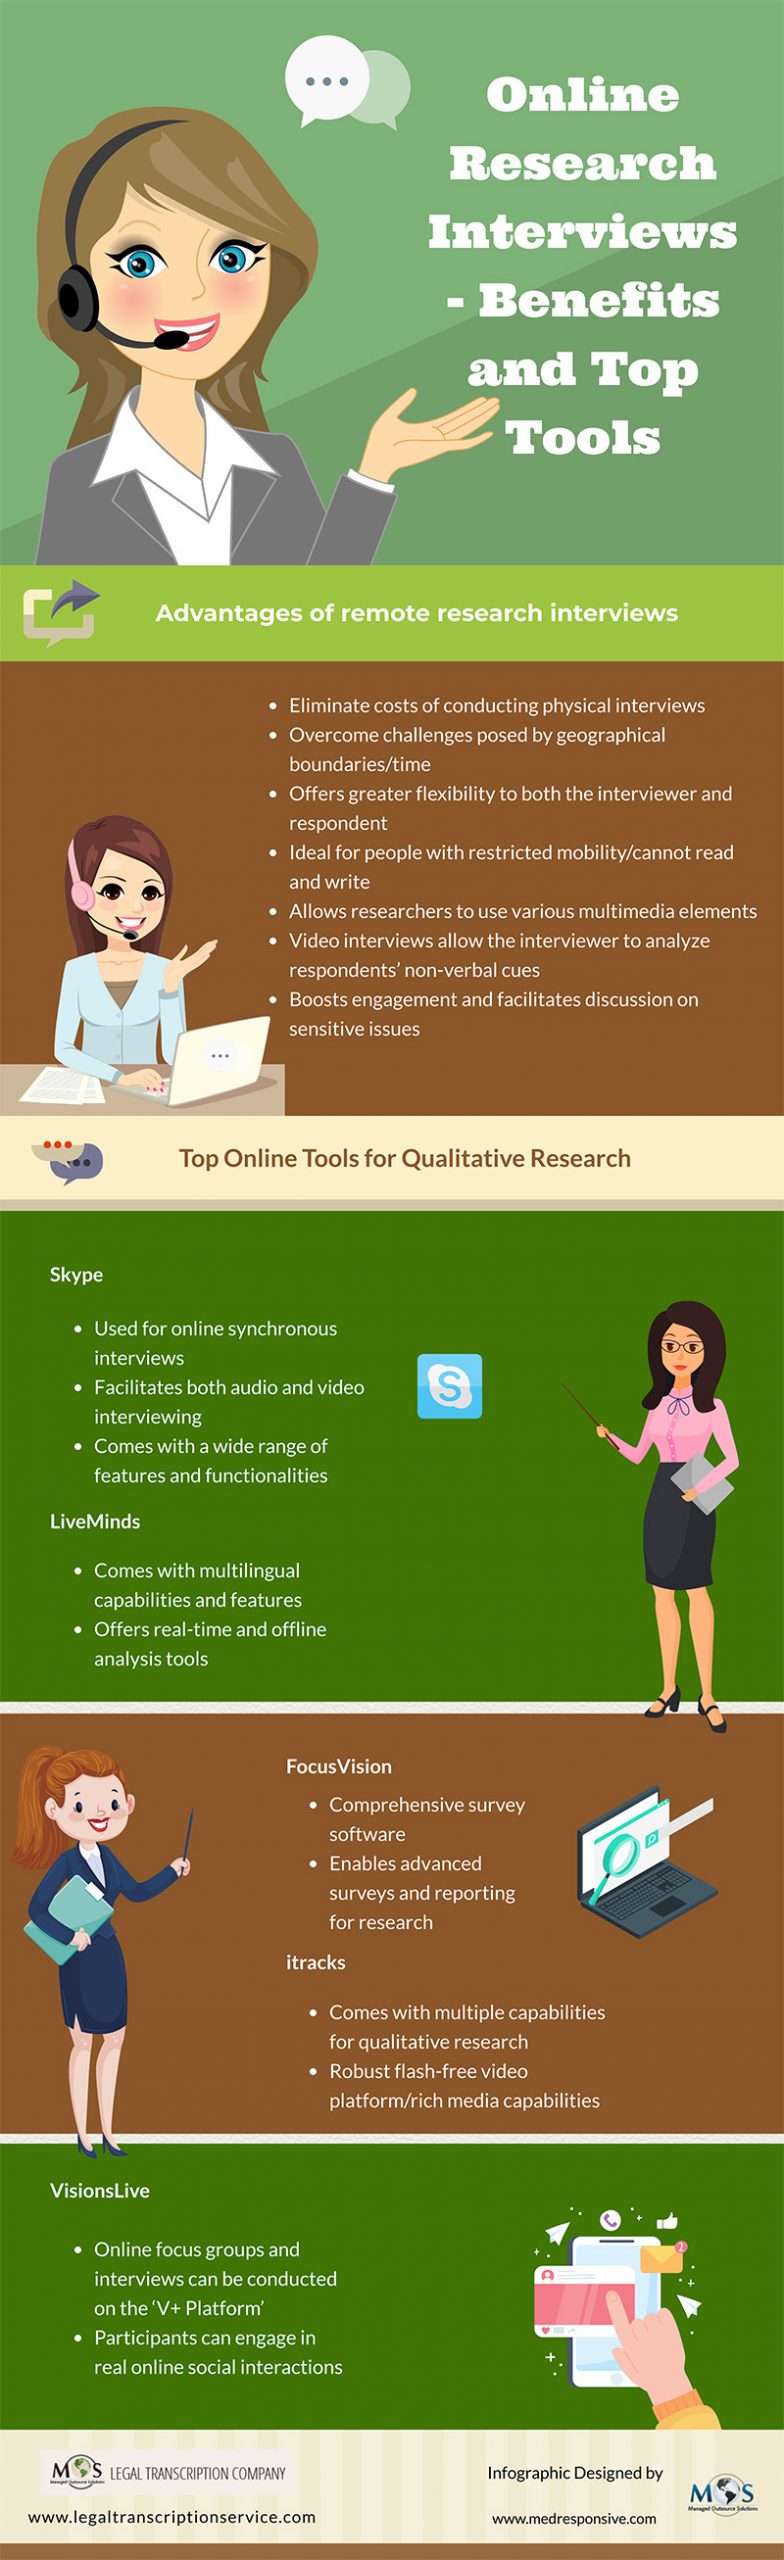 Online Research Interviews